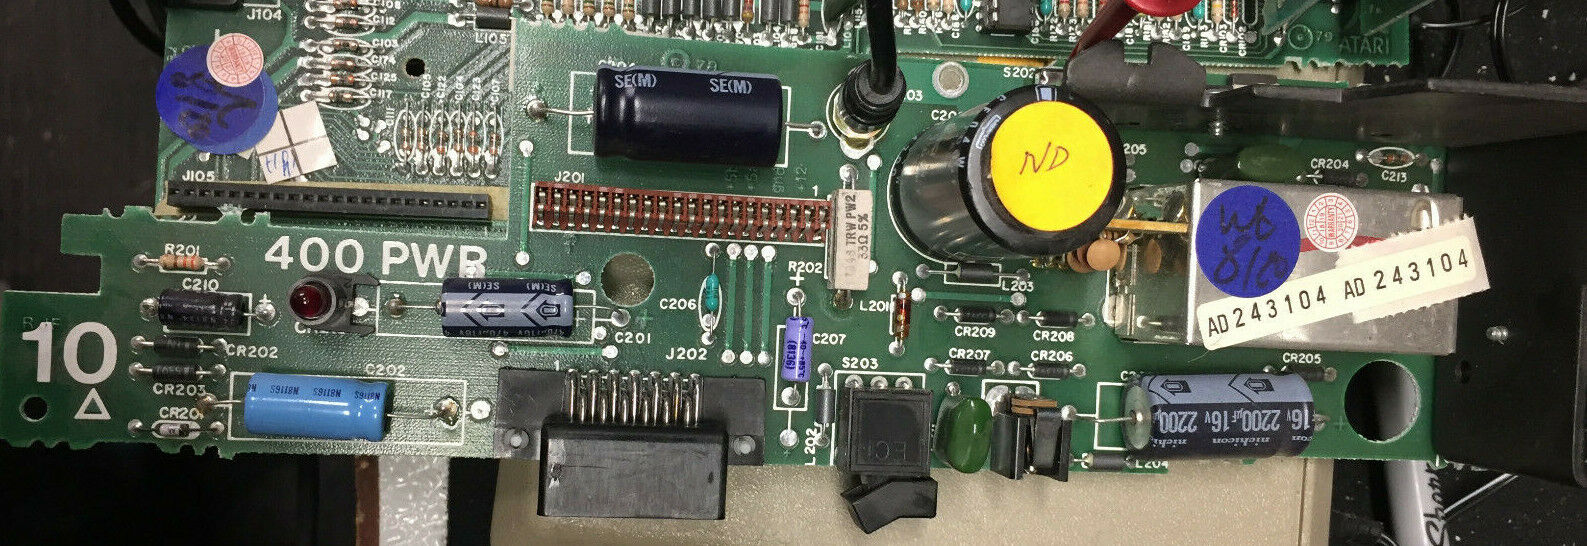 Atari 400 Power Pcb Tested Working